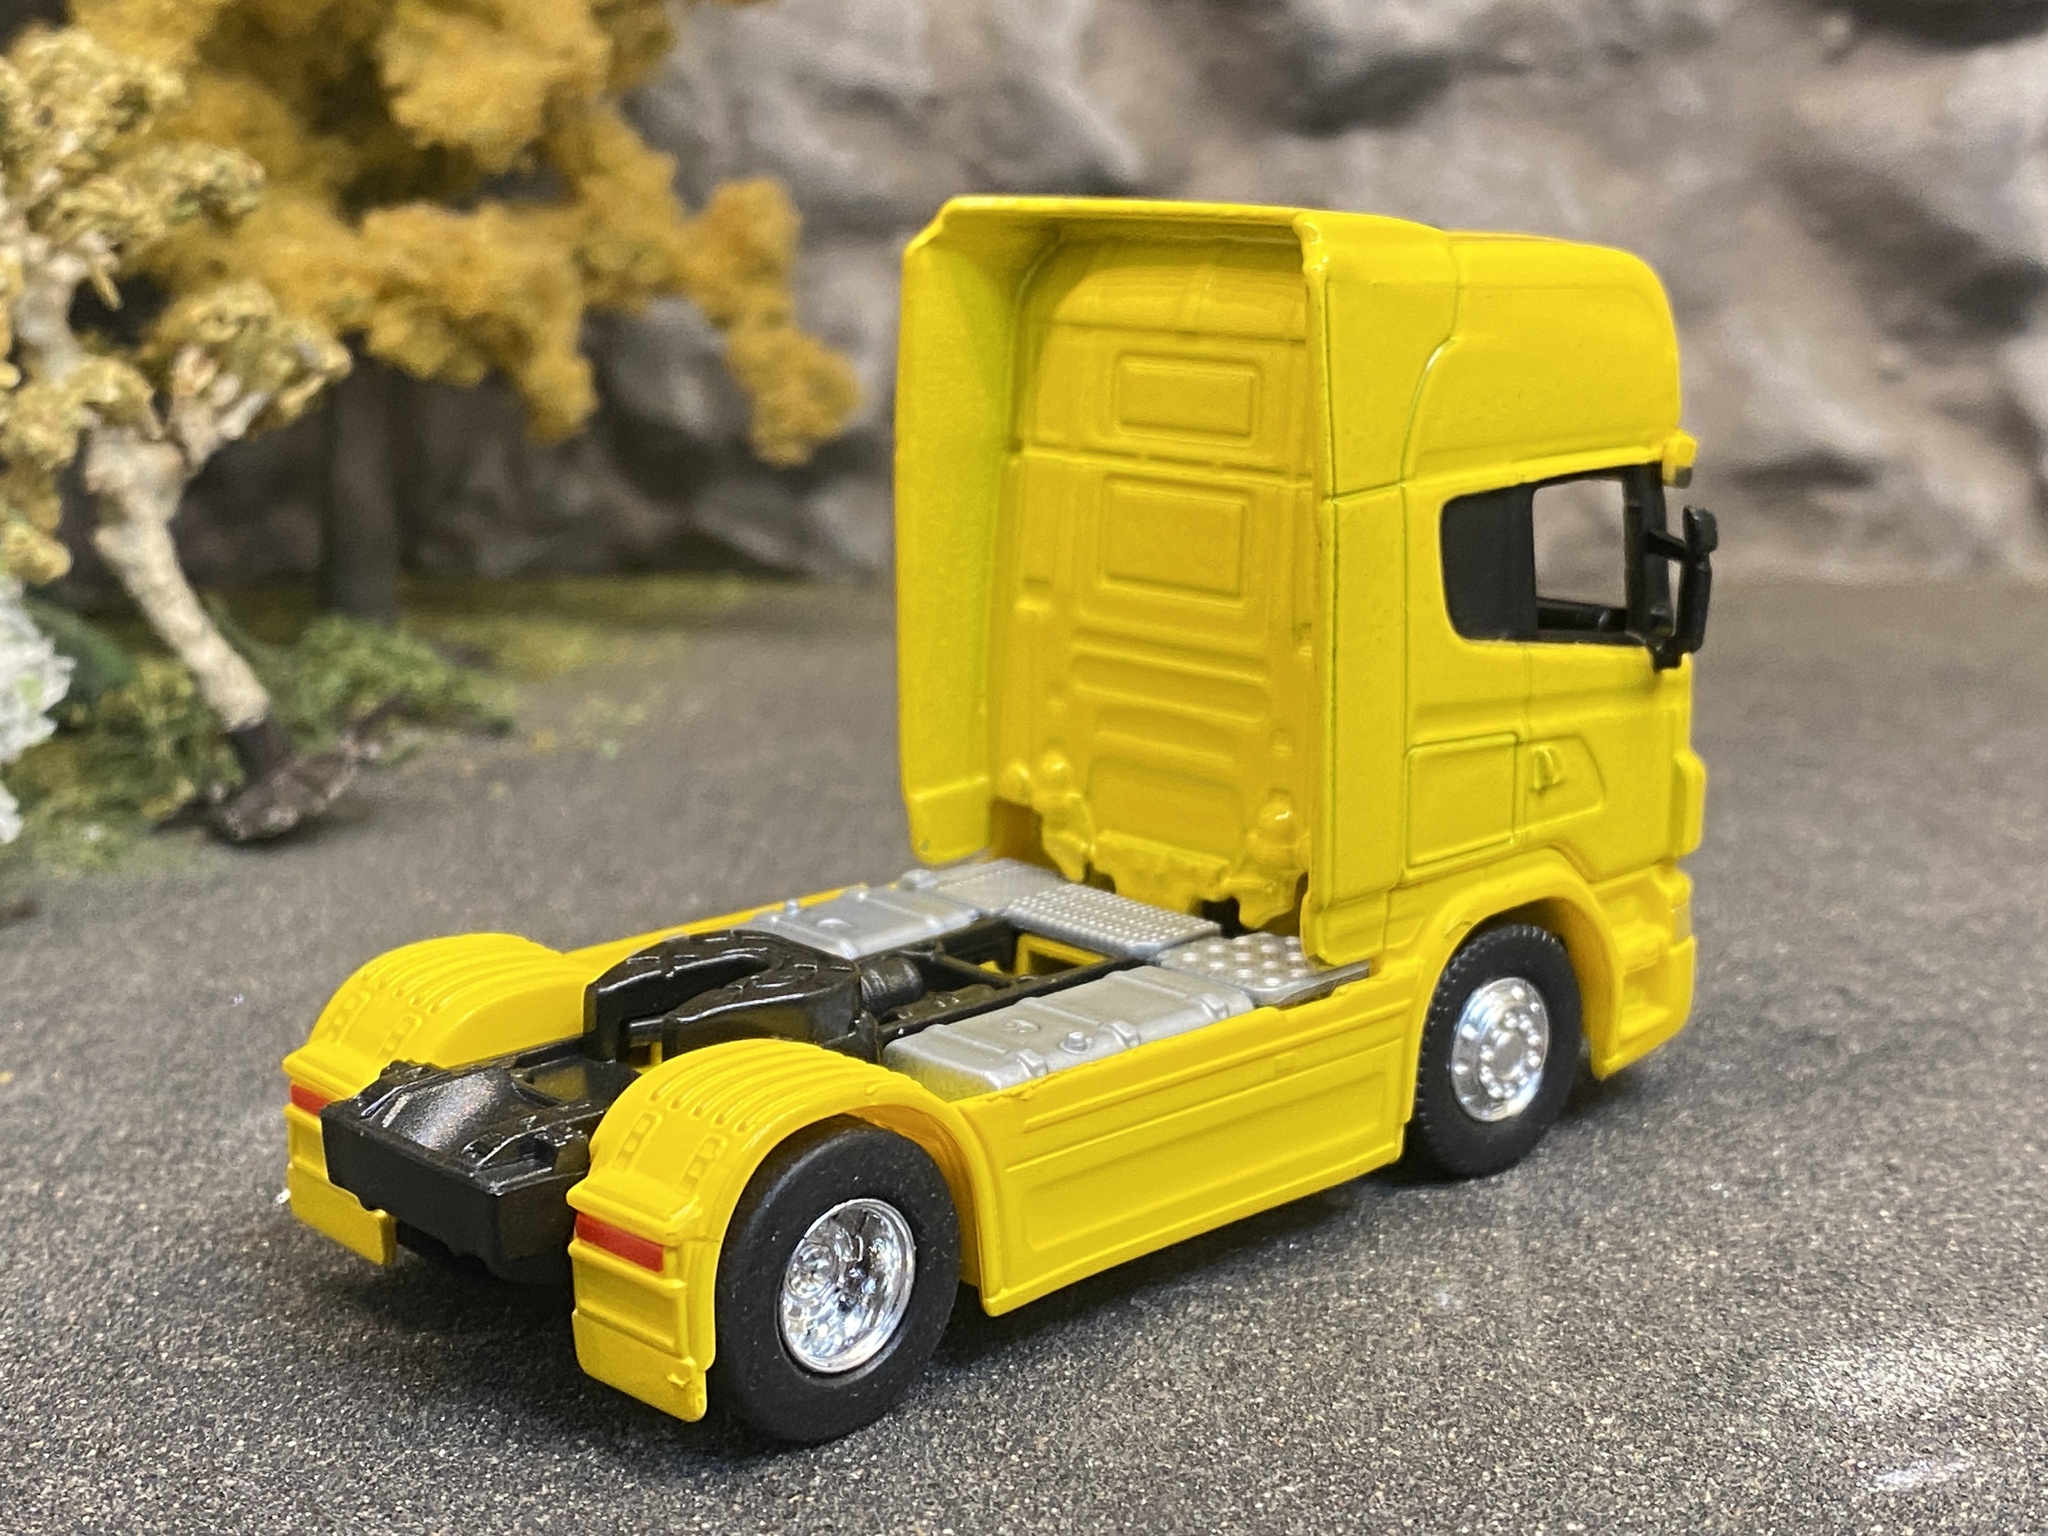 Skala 1/64 - Scania V8 R730 tractor 2-axle, yellow fr Welly